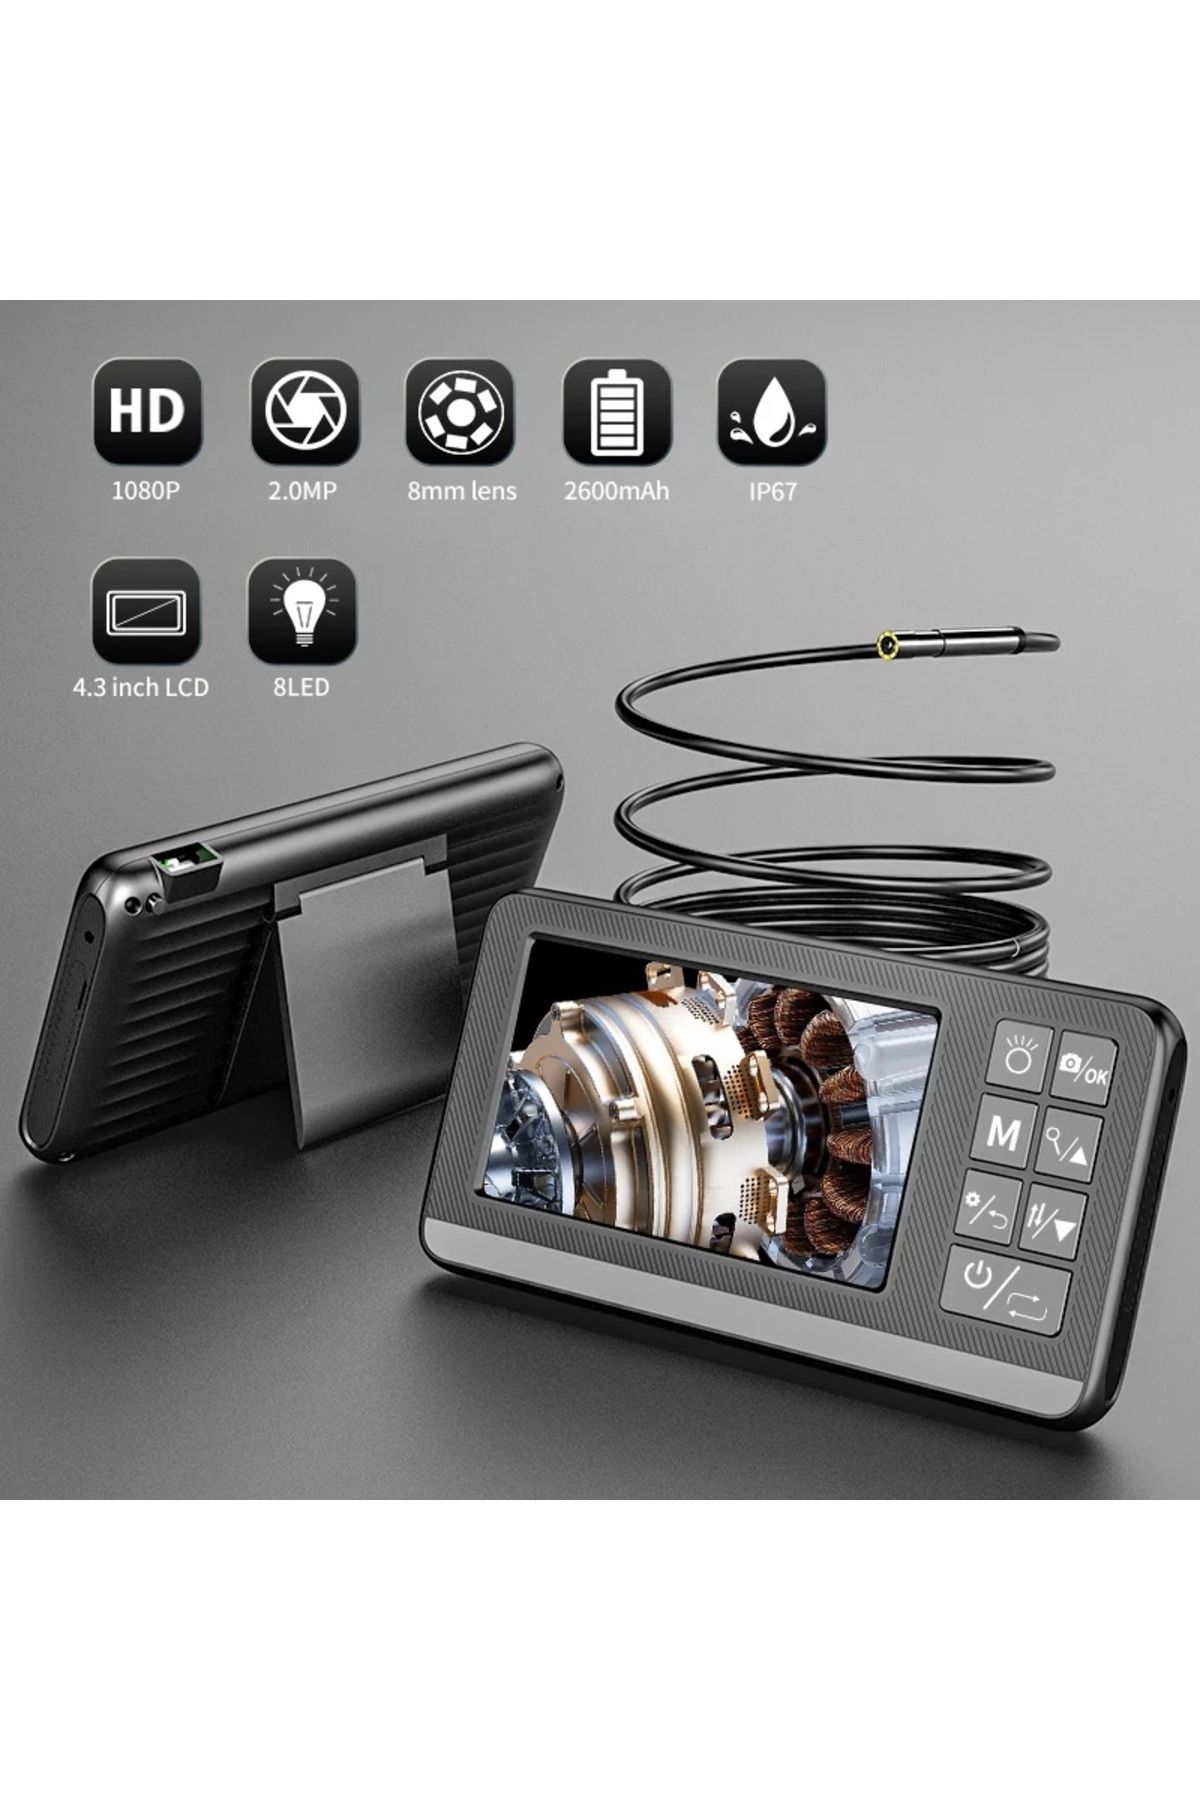 Kalite 4.3 inç Ekranlı Yılan Kamera (8 Led + Hafıza Karta Kayıt + 5 Metre Kameralı Kablo)